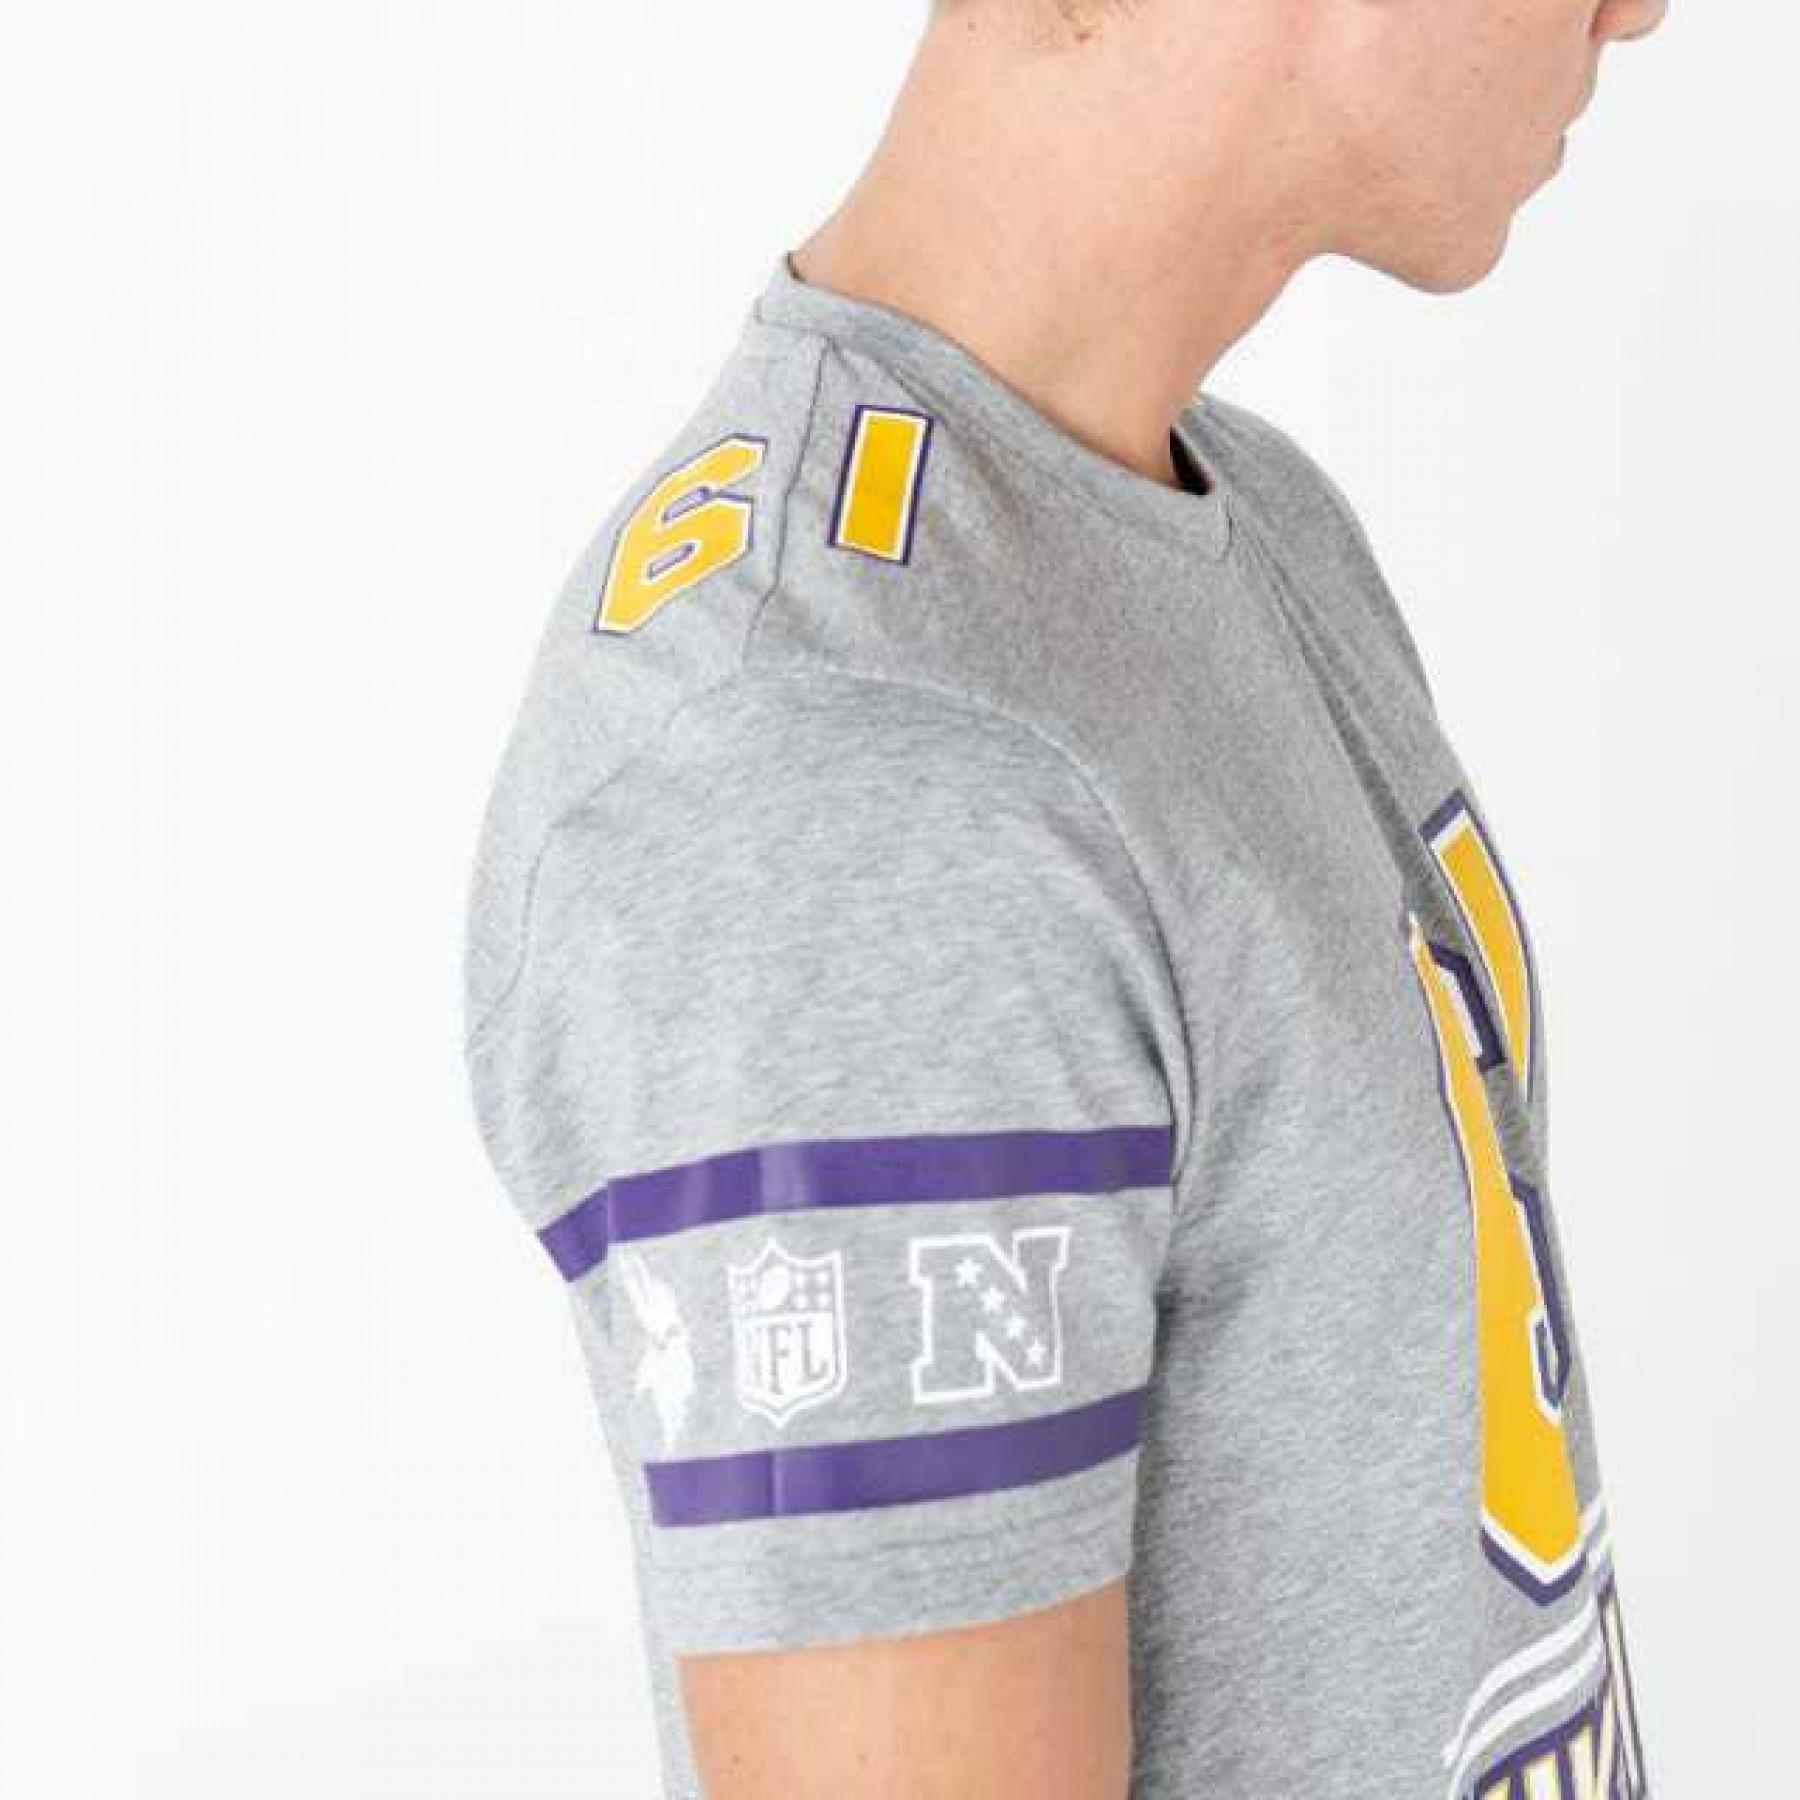 T-shirt New Era Team Established Minnesota Vikings